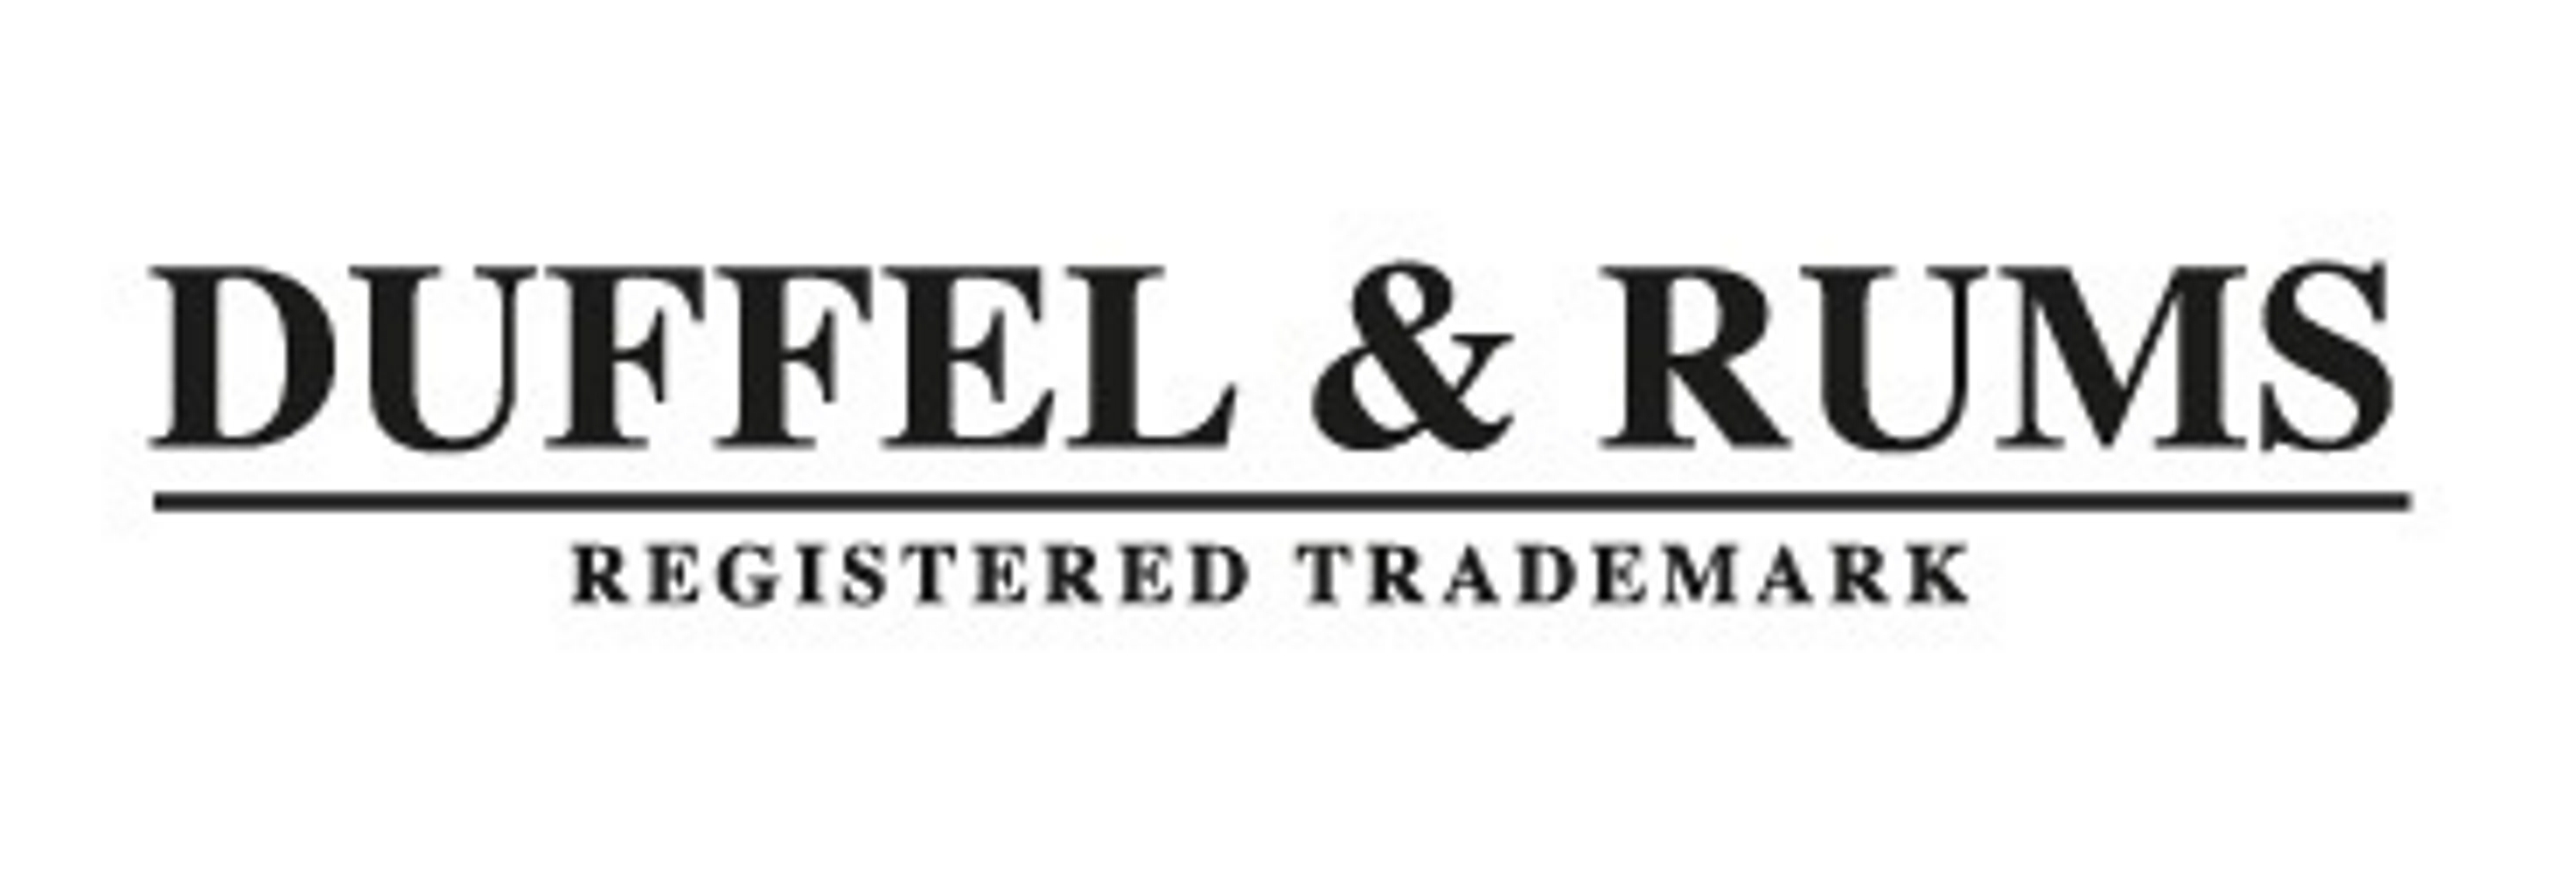 Duffel&Rums Logo